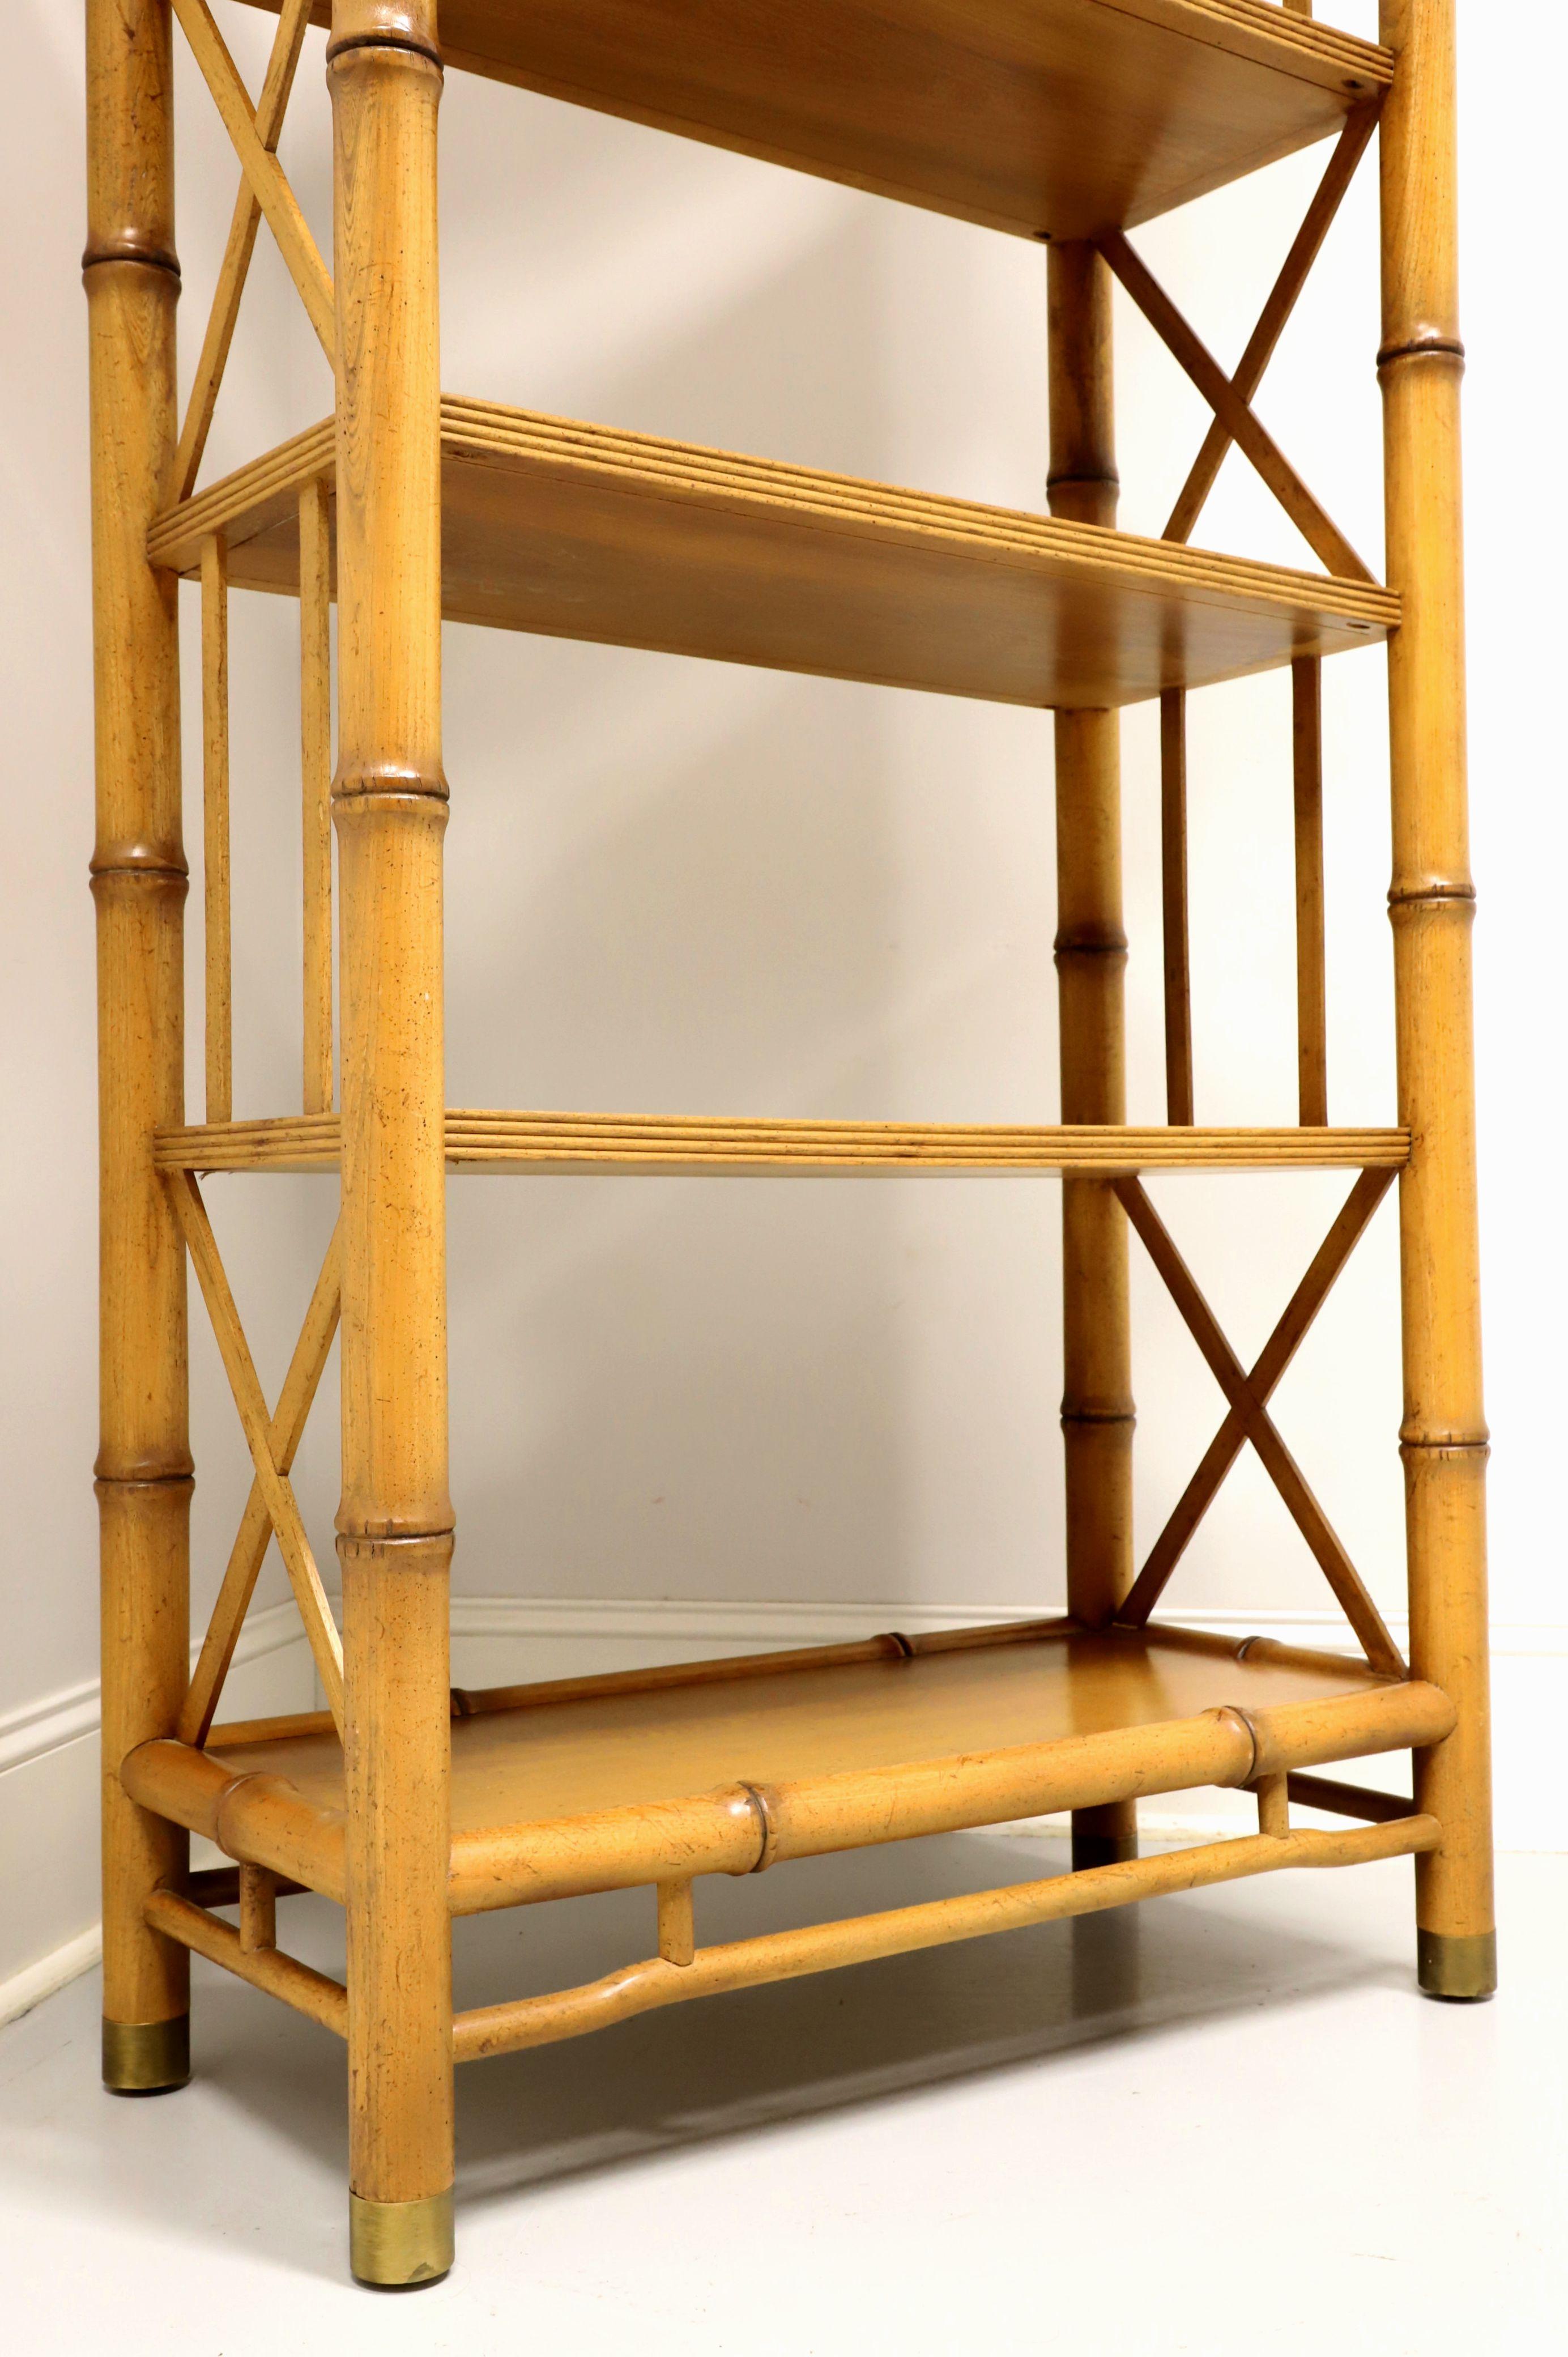 BAKER 1960's Faux Bamboo Etagere Display Shelving Unit - C 1